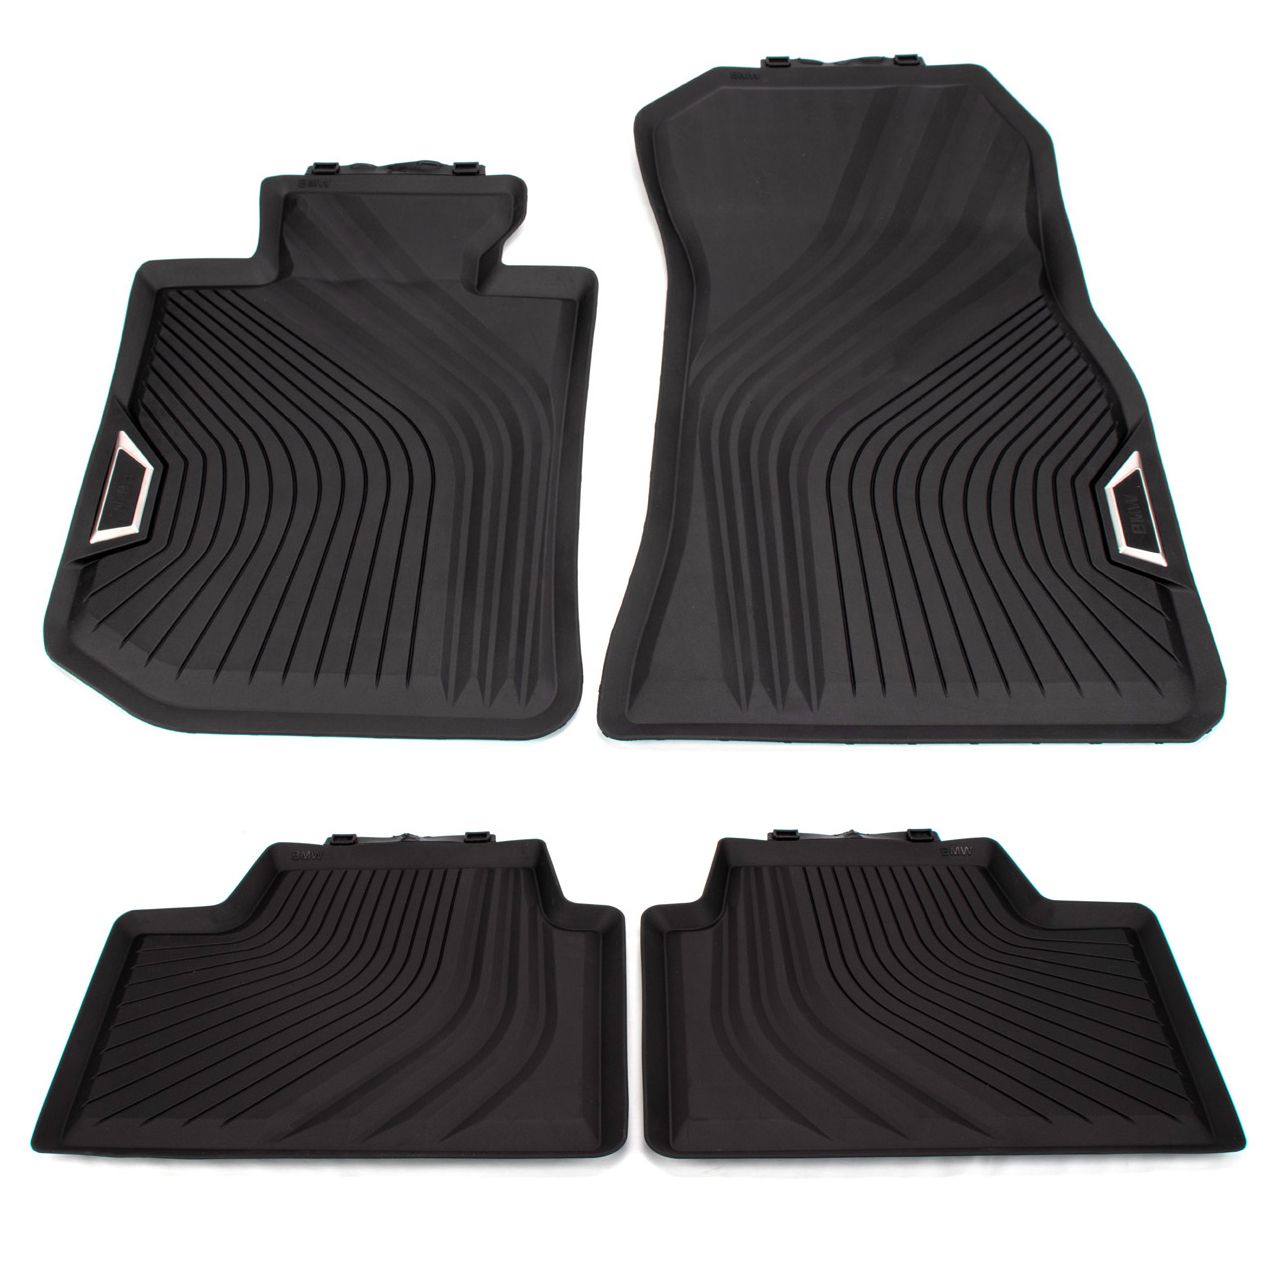 Original rubber mats / rubber floor mats for your vehicle